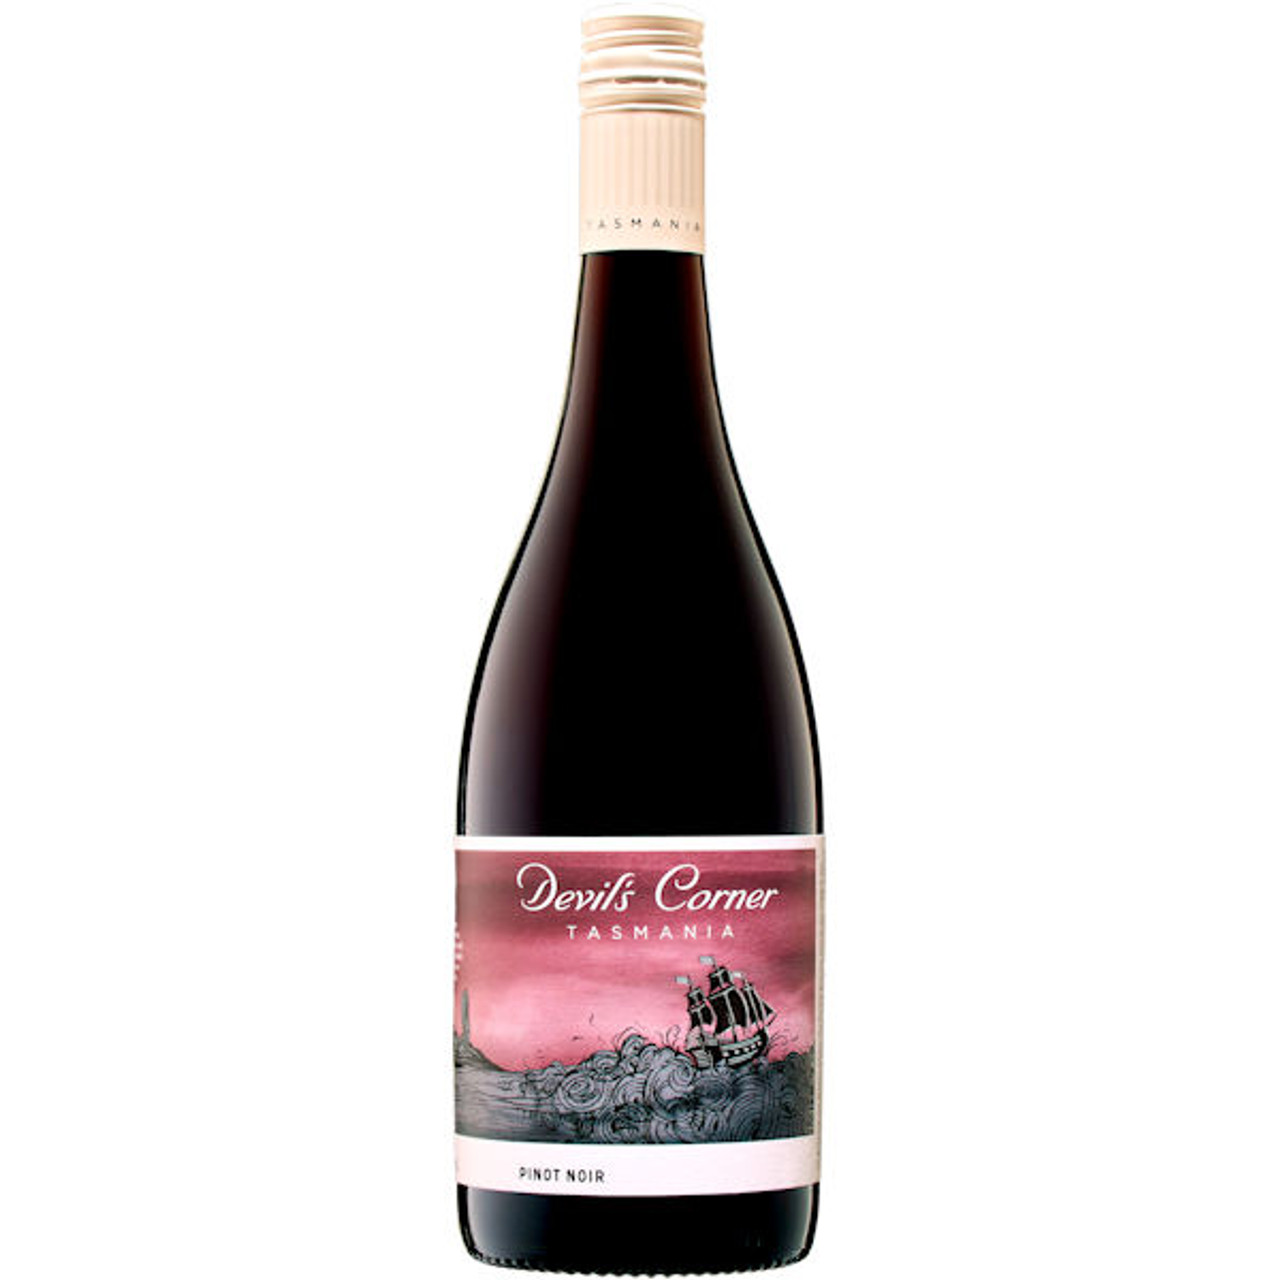 Devil's Corner Tasmania Pinot Noir